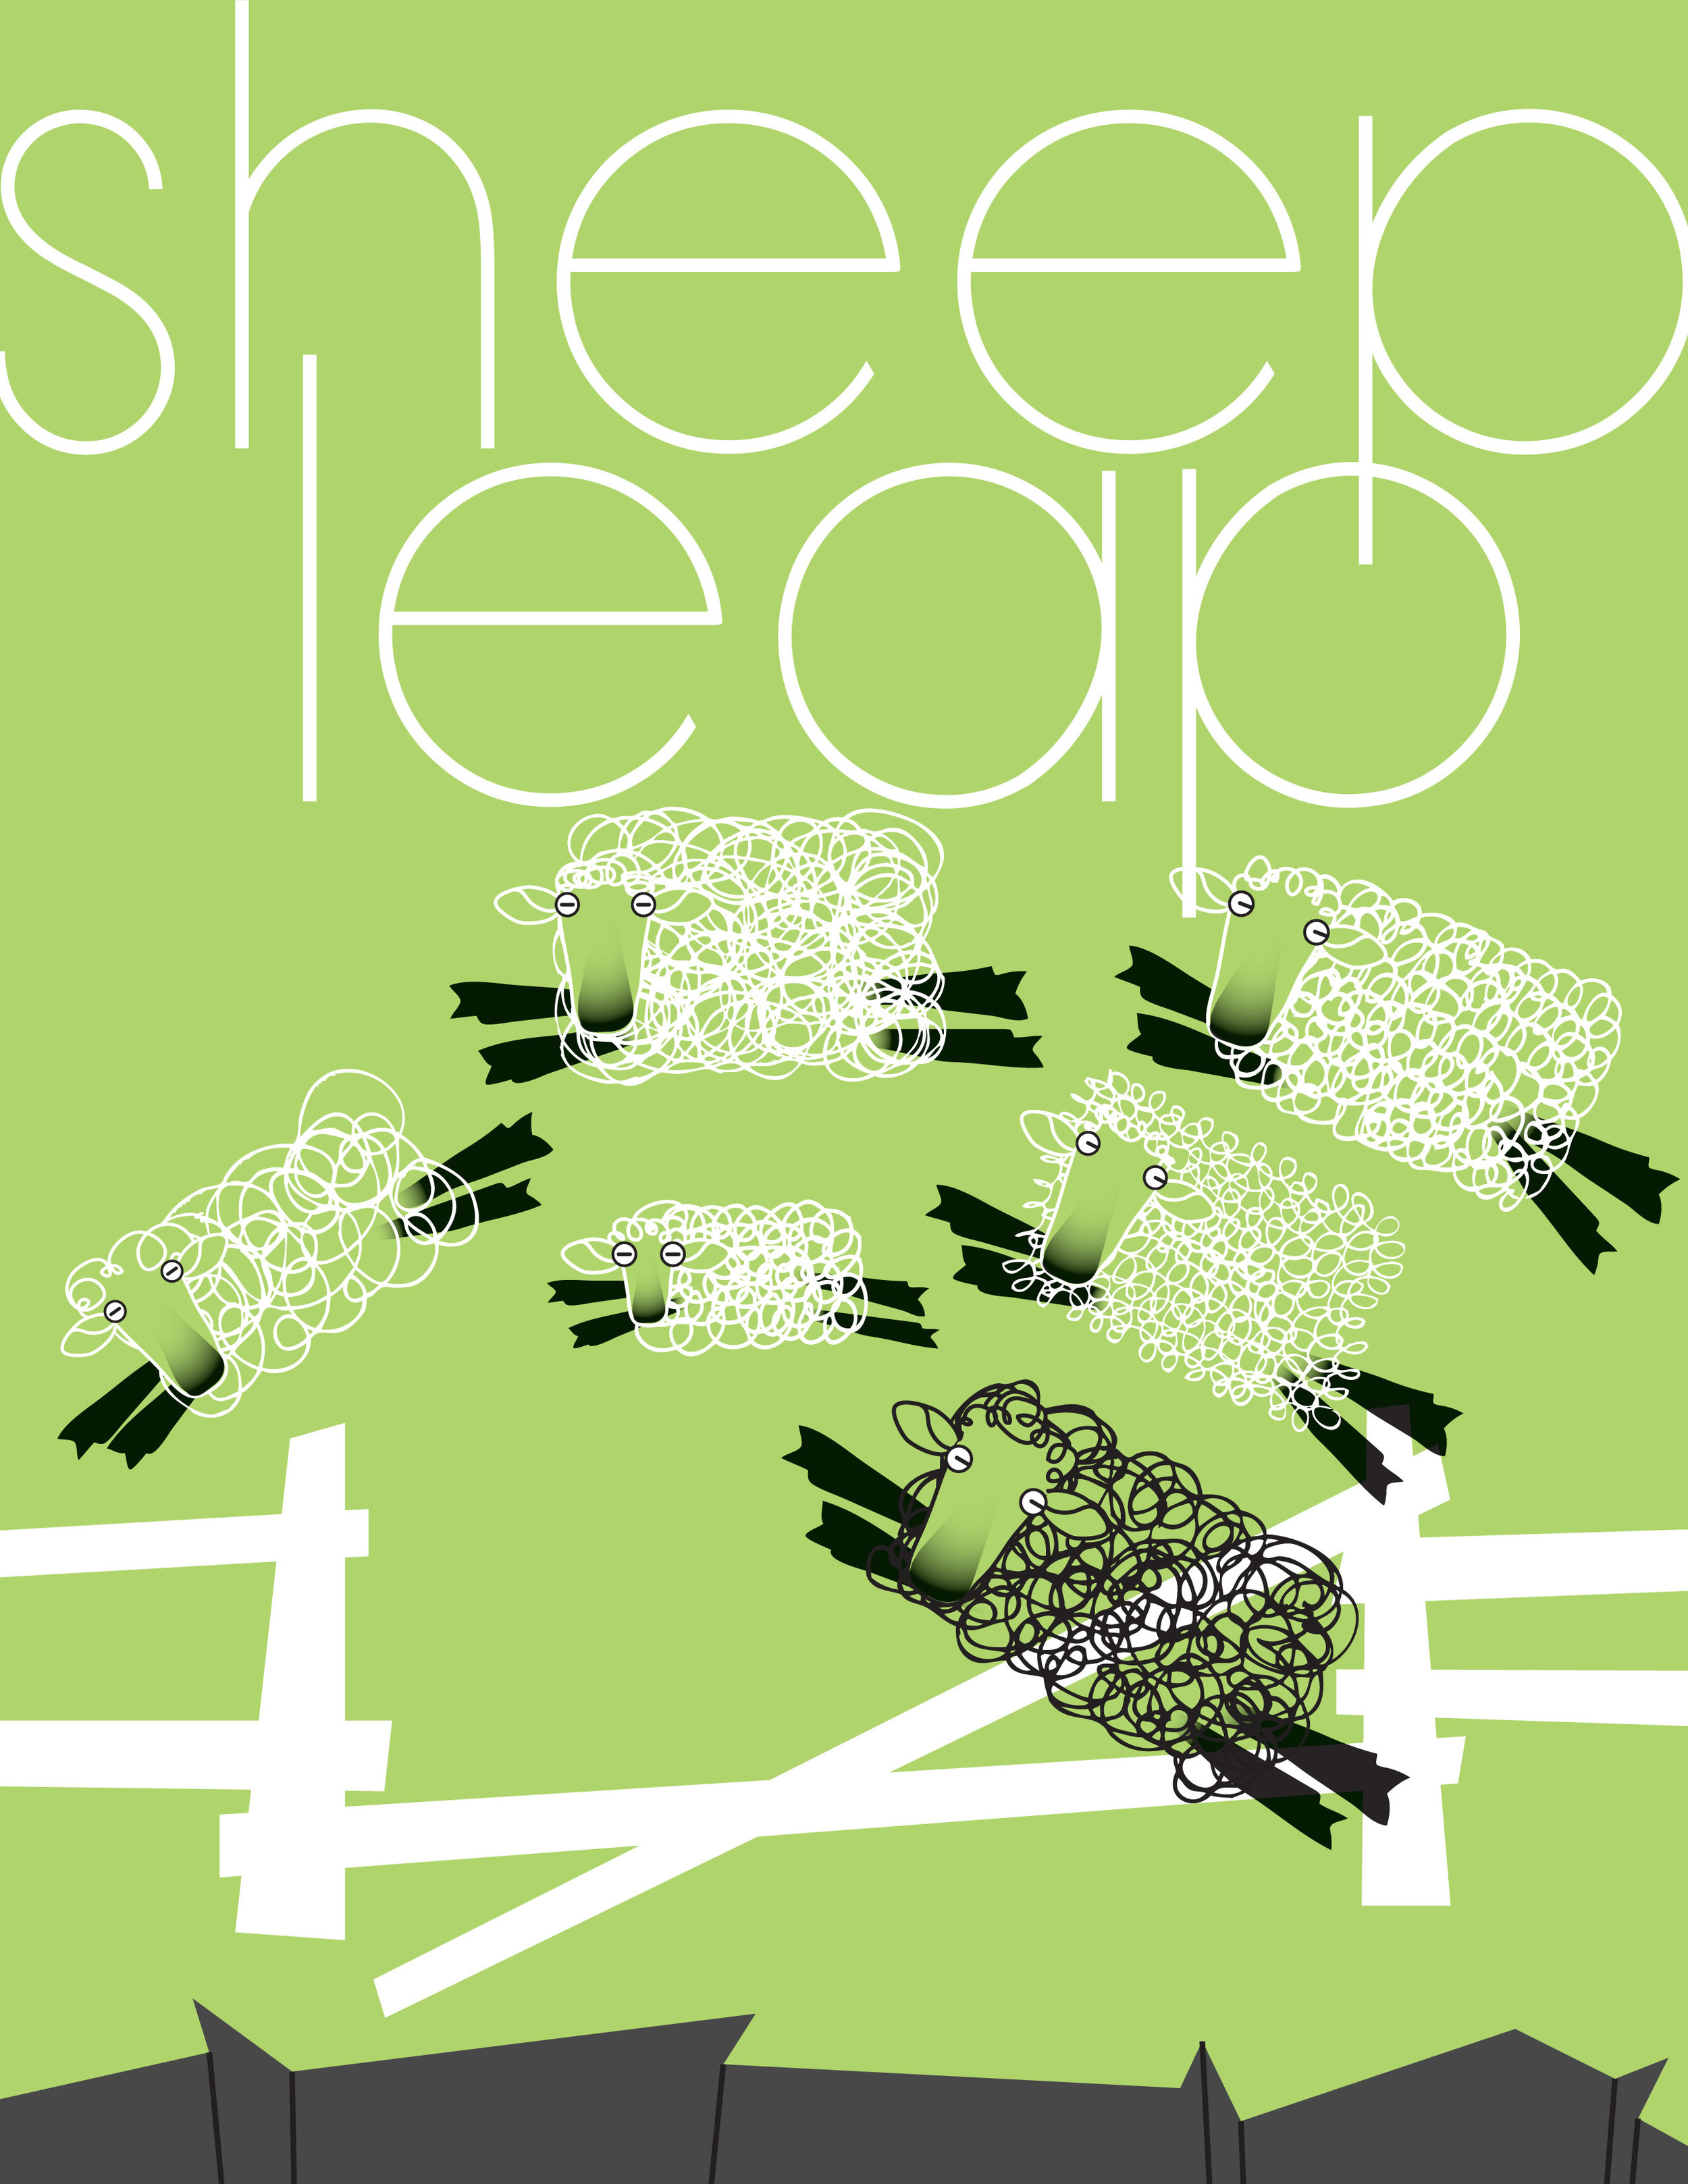 Sheep Sleep Book 2-12.jpg